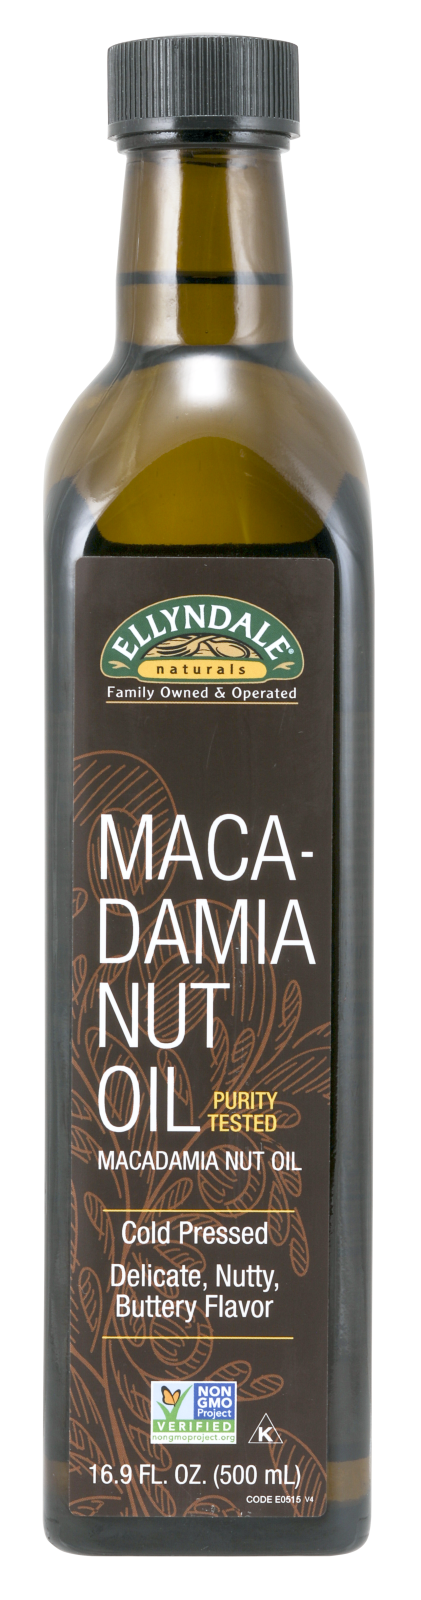 Macadamia Nut Cooking Oil in Glass Bottle - 16.9 fl. oz.